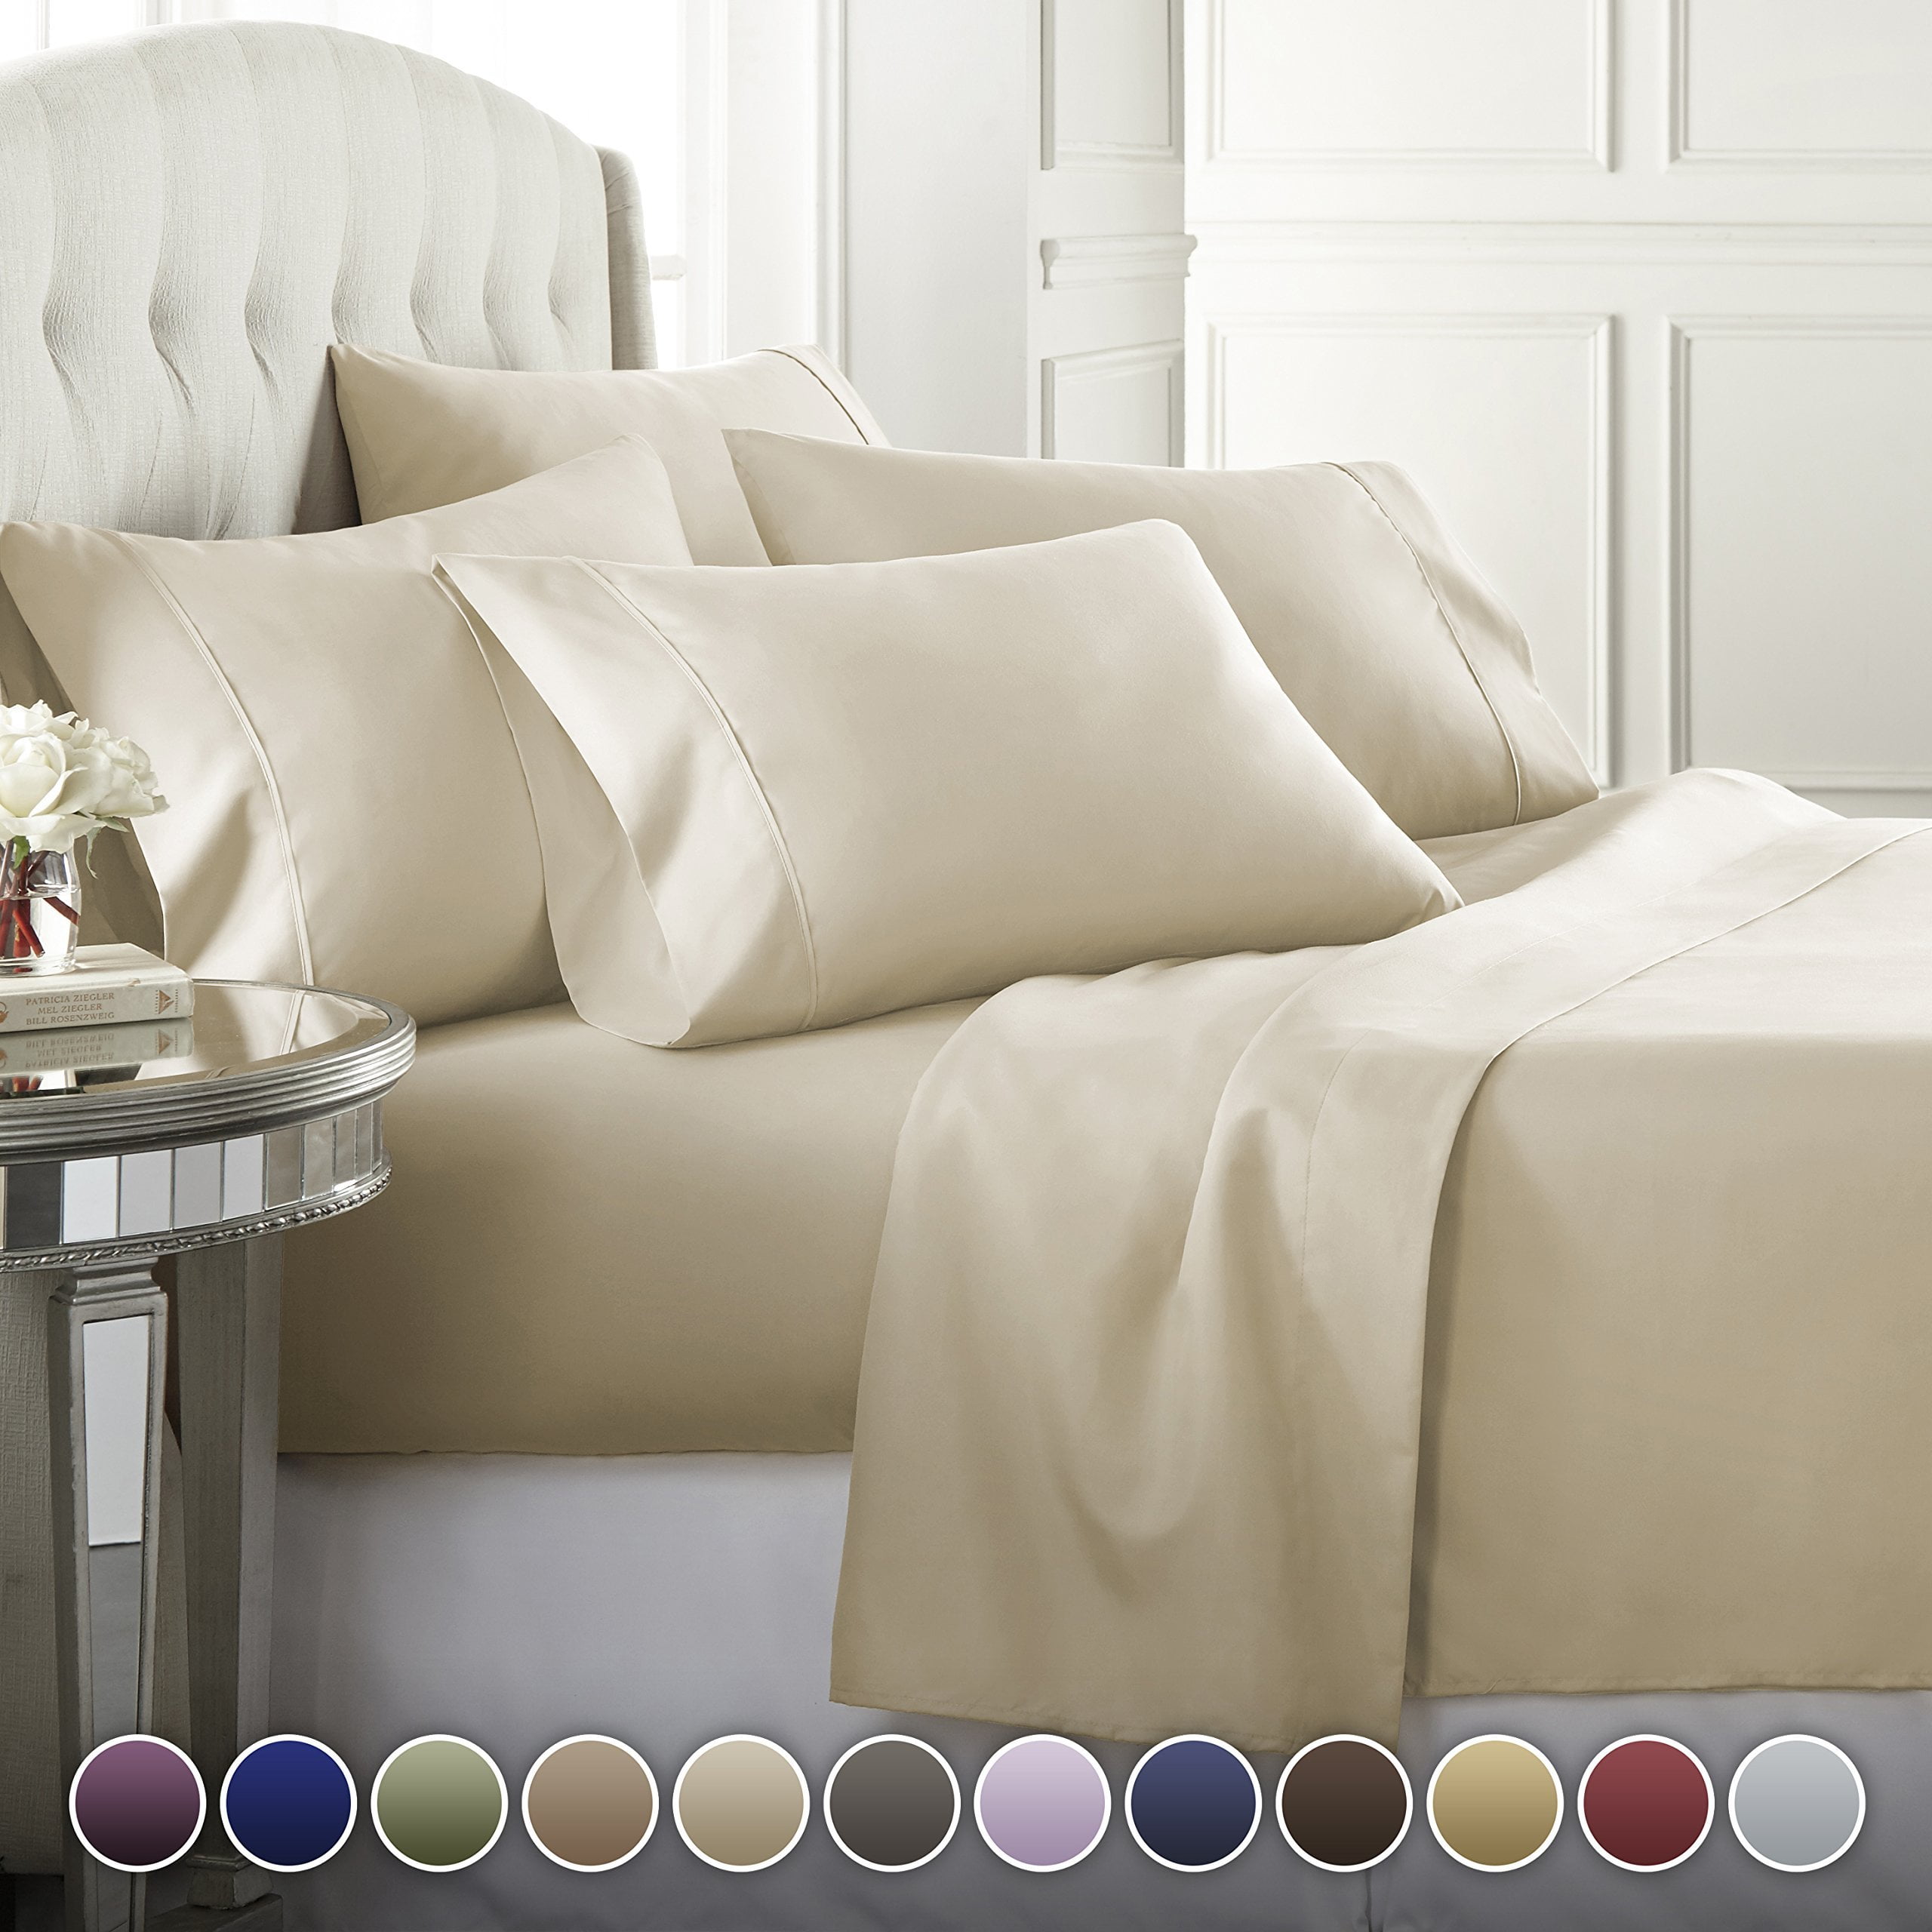 Details about   Full Size 6 PCs Top Bedding Sheet Set Pocket Depth Egyptian Cotton Stripe Colors